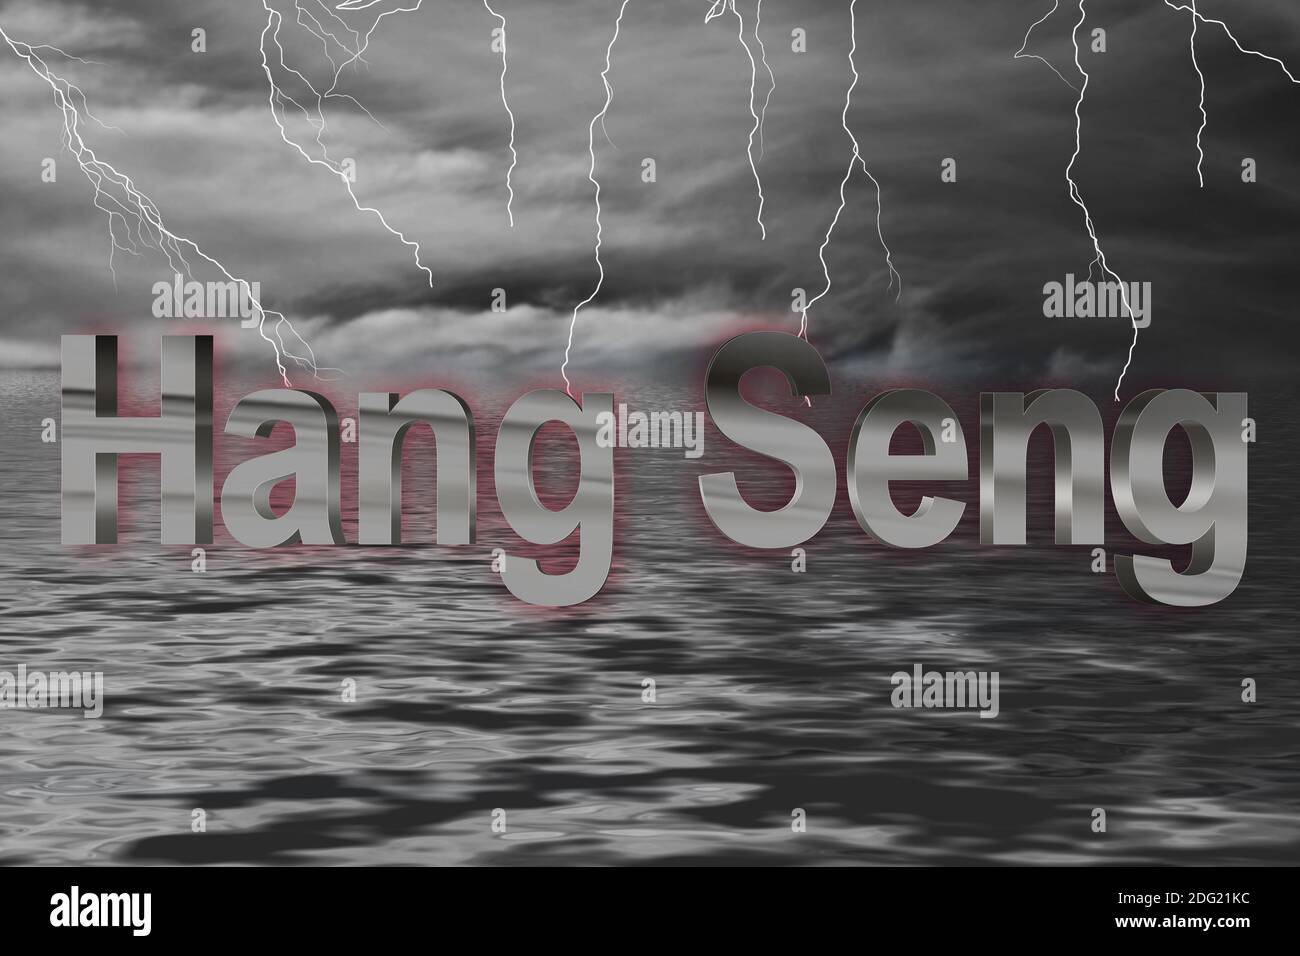 Börse Ozean Gewitter mit Blitzen und Schriftzug Hang Seng in Chrom Stock Photo